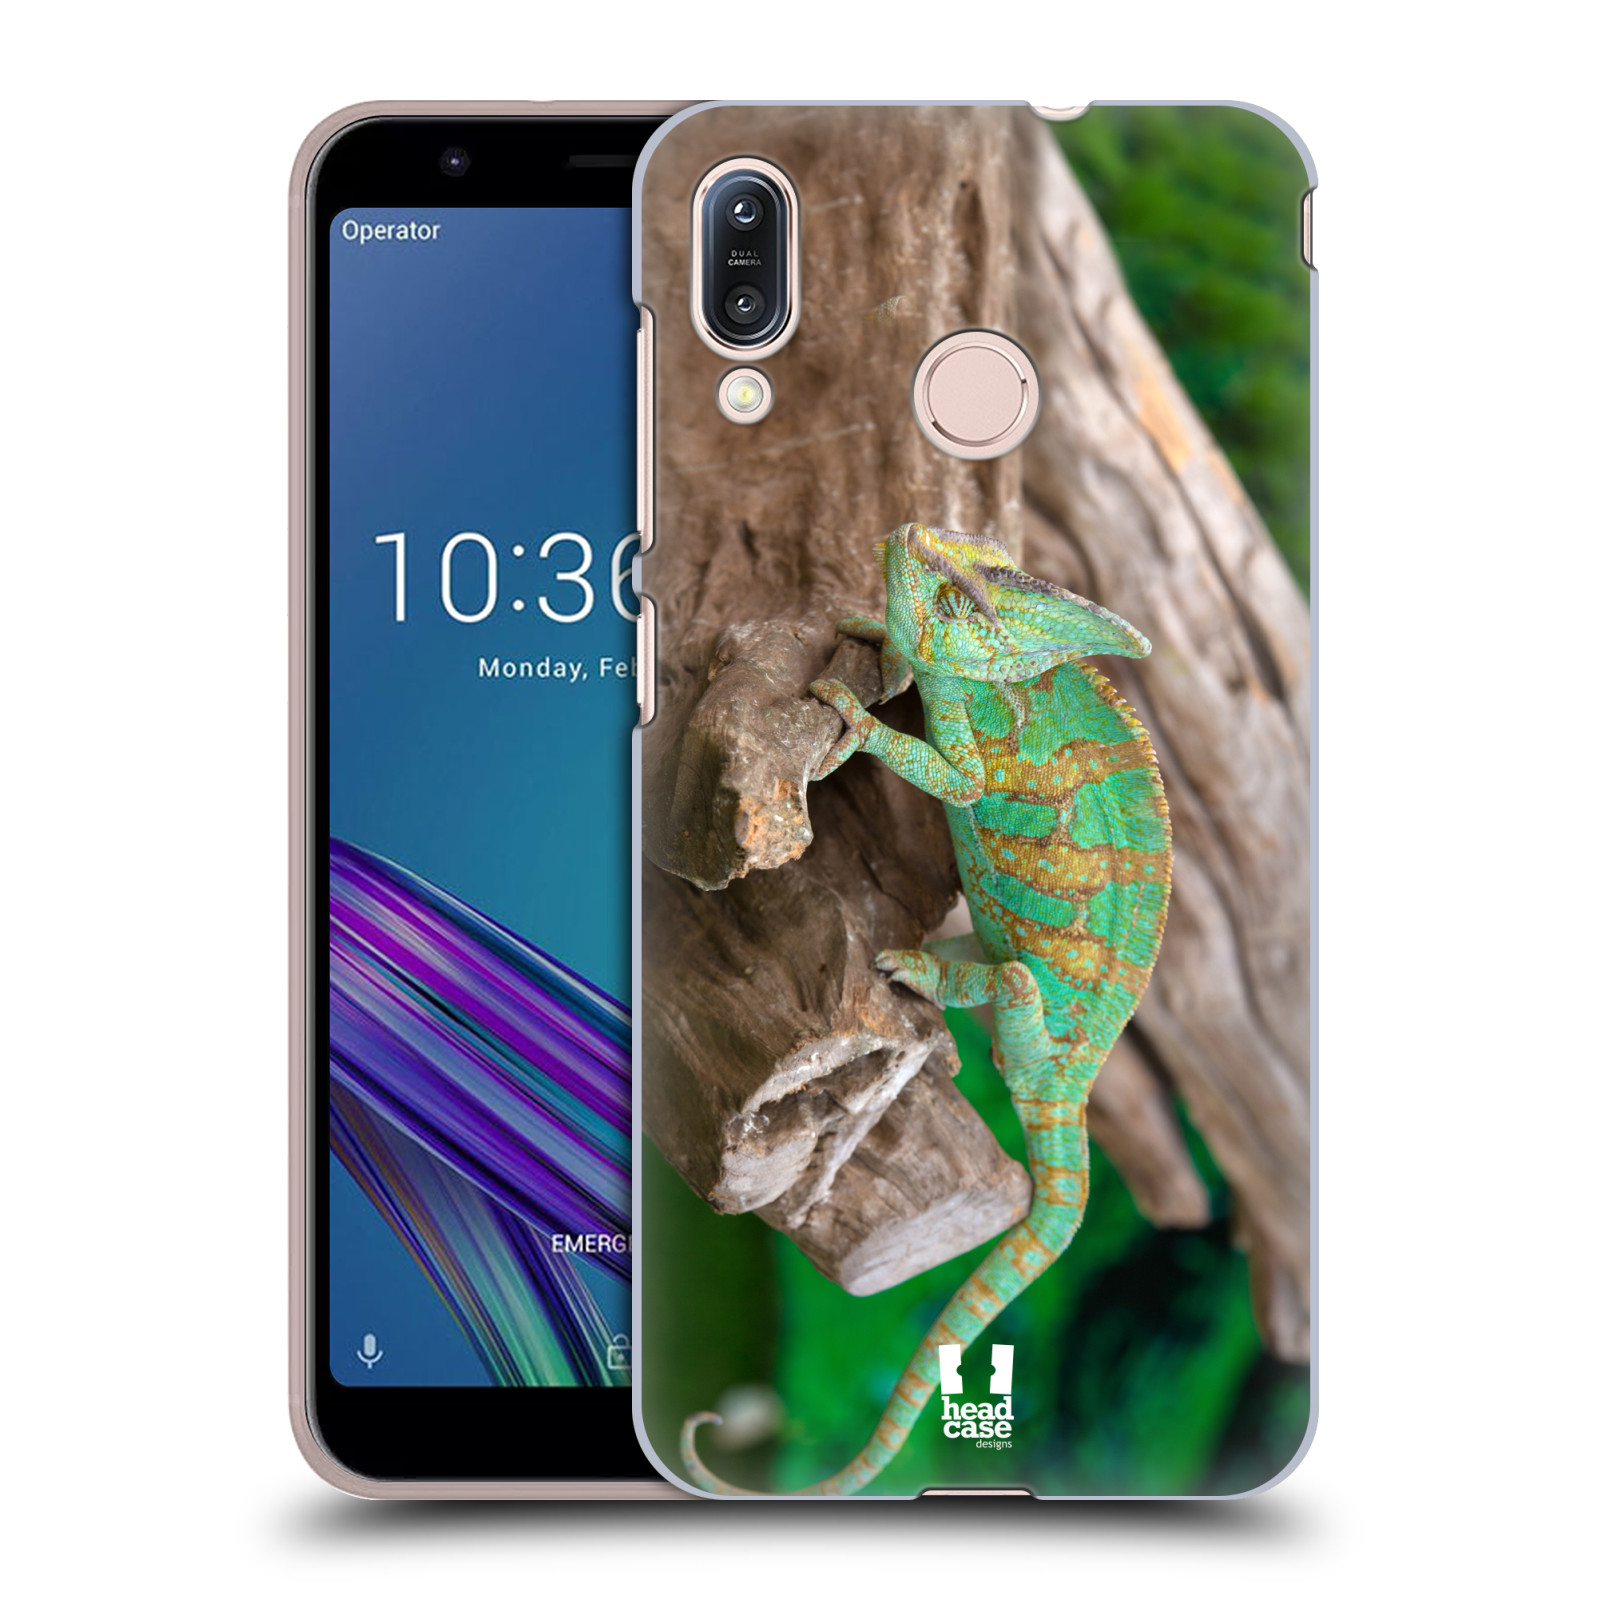 Pouzdro na mobil Asus Zenfone Max M1 (ZB555KL) - HEAD CASE - vzor slavná zvířata foto chameleon